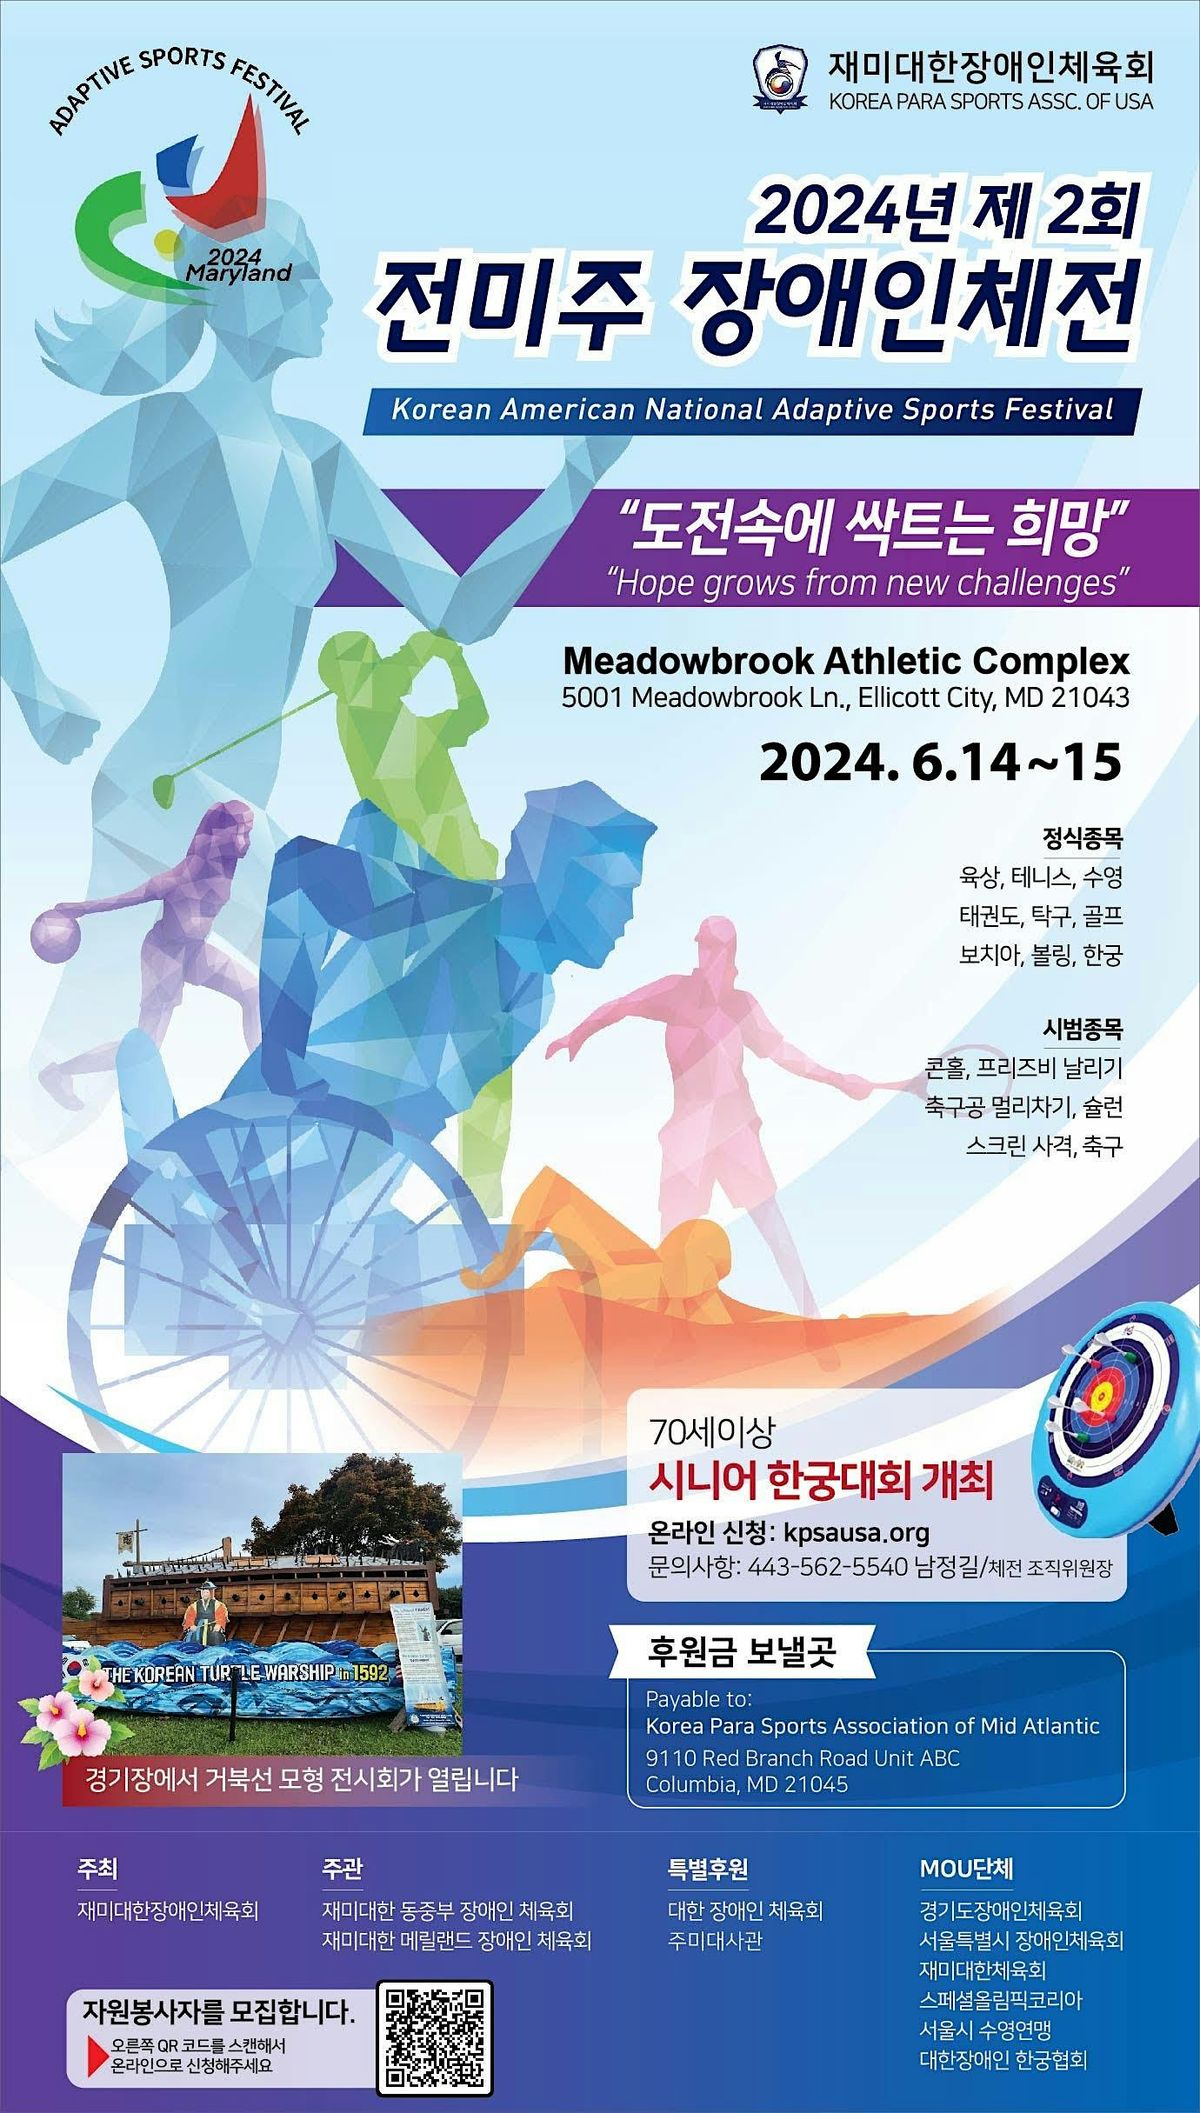 2024 Korean American National Adaptive Sports Festival